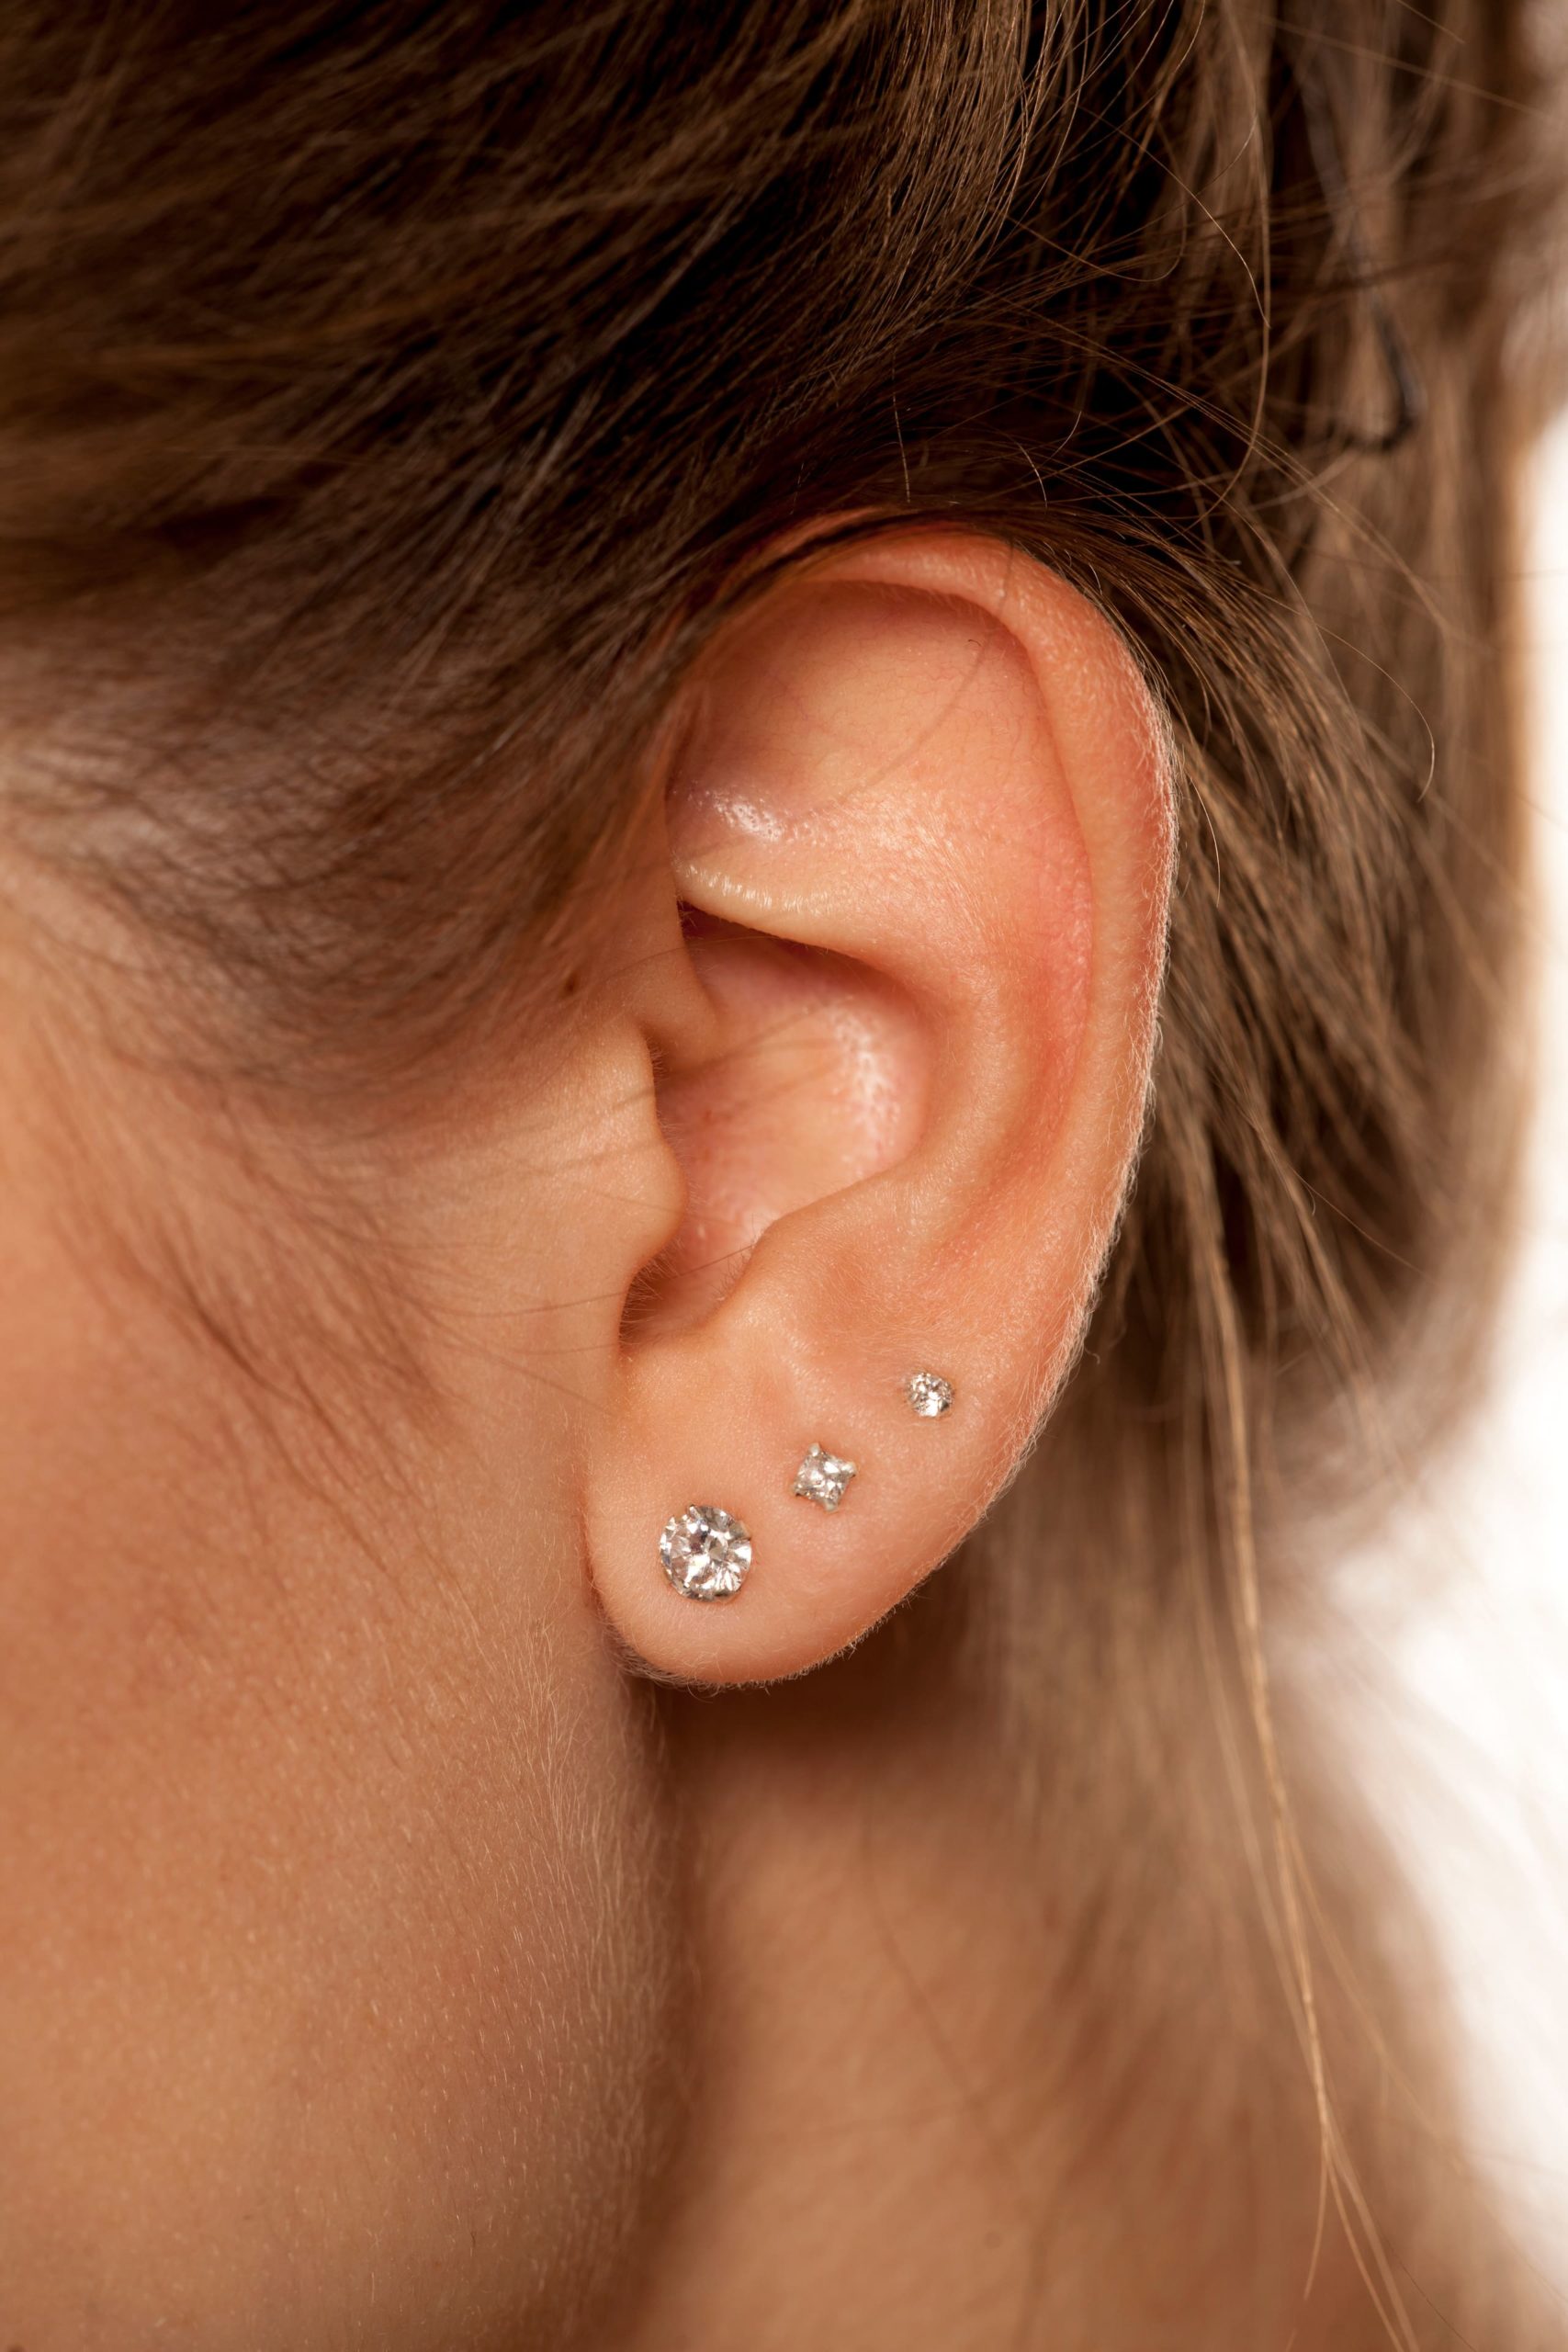 Ear Piercing | Aesthetic Center of Richmond in Glen Allen, VA